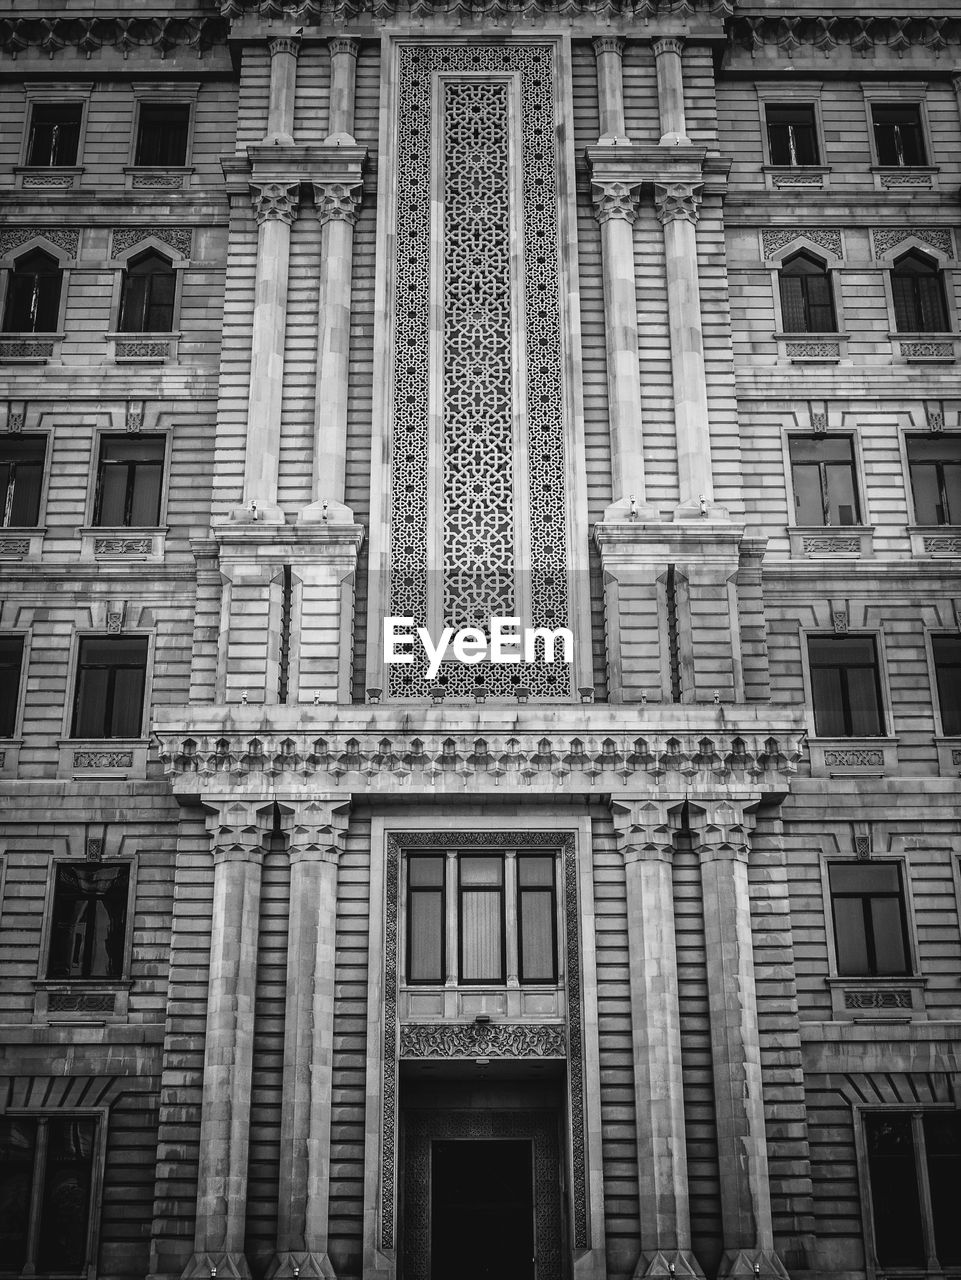 Azerbaijan traditional architecture elements in a building facade in baku